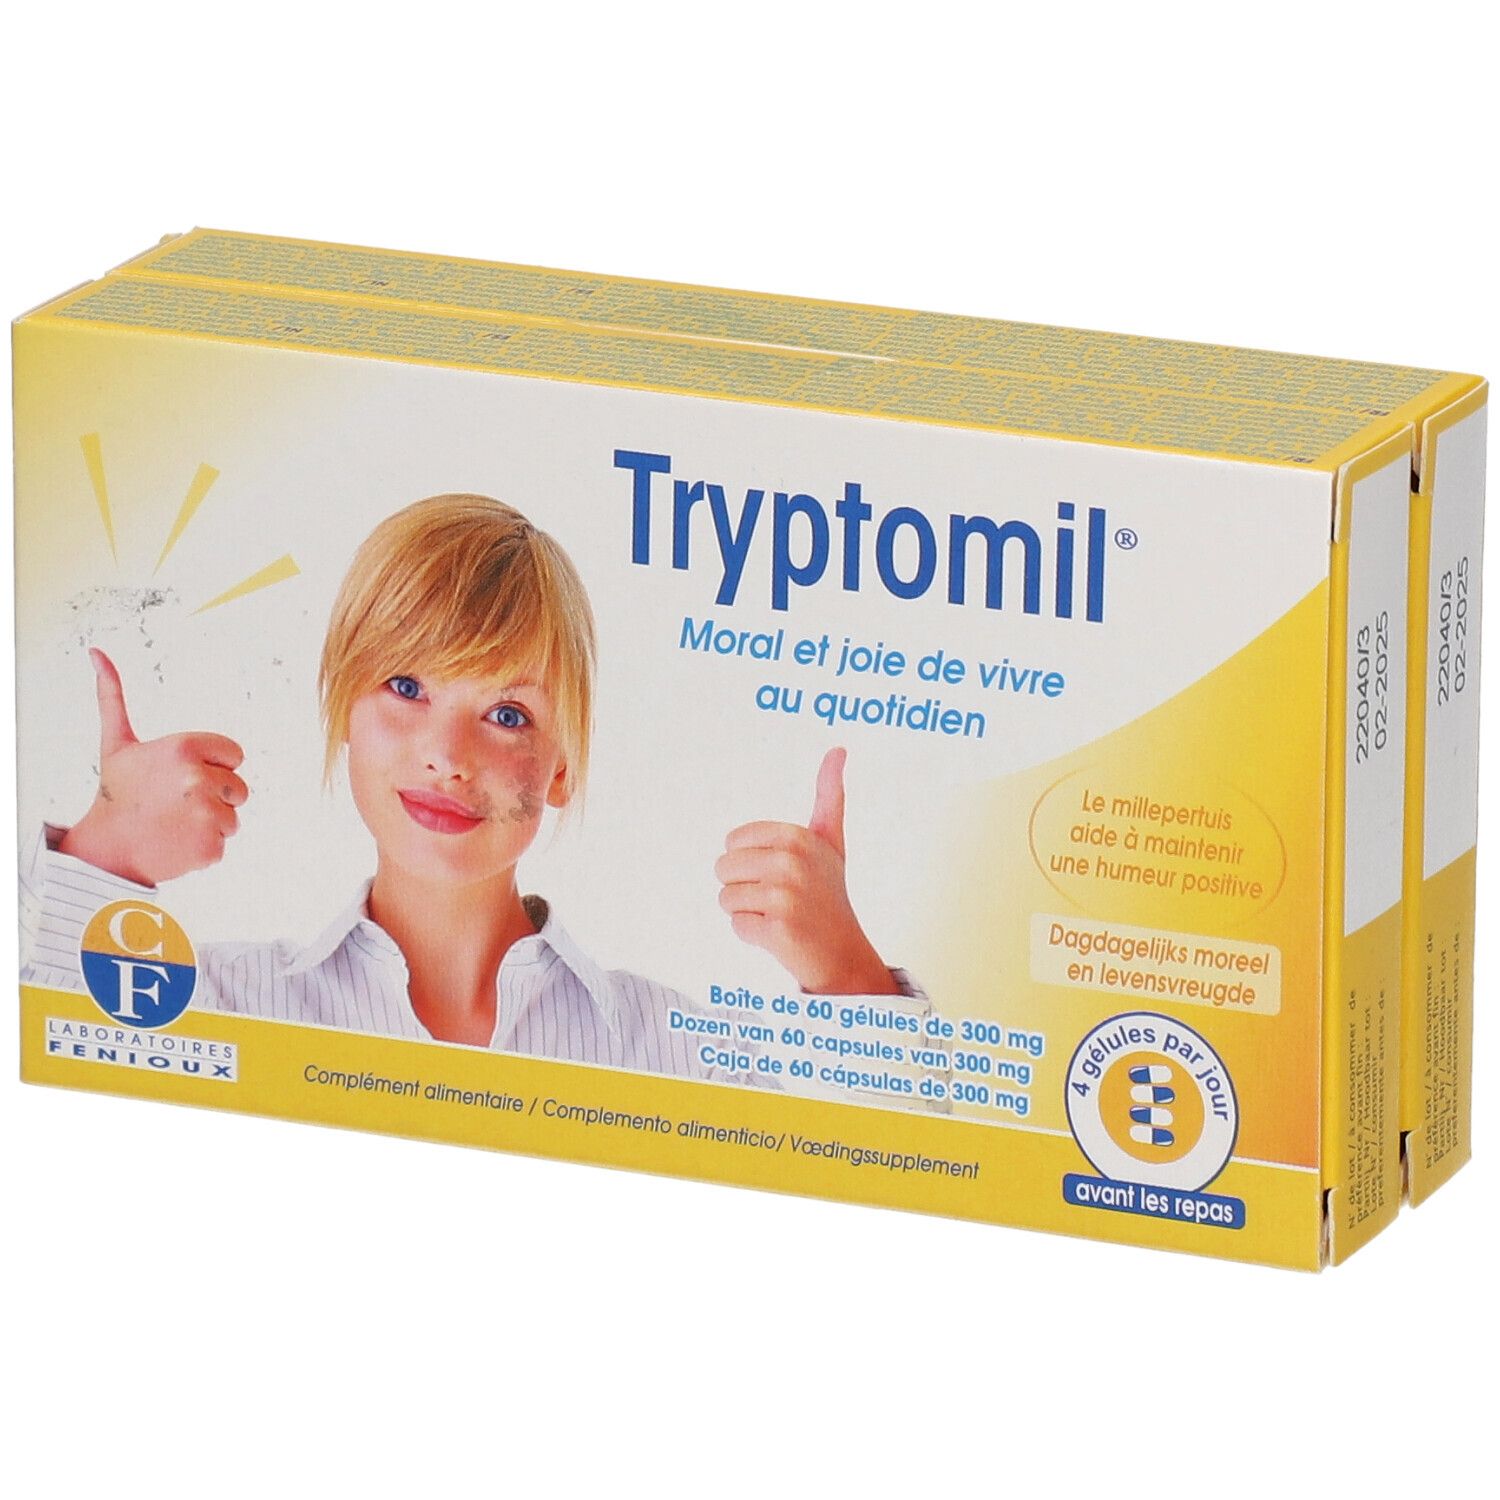 Tryptomil®